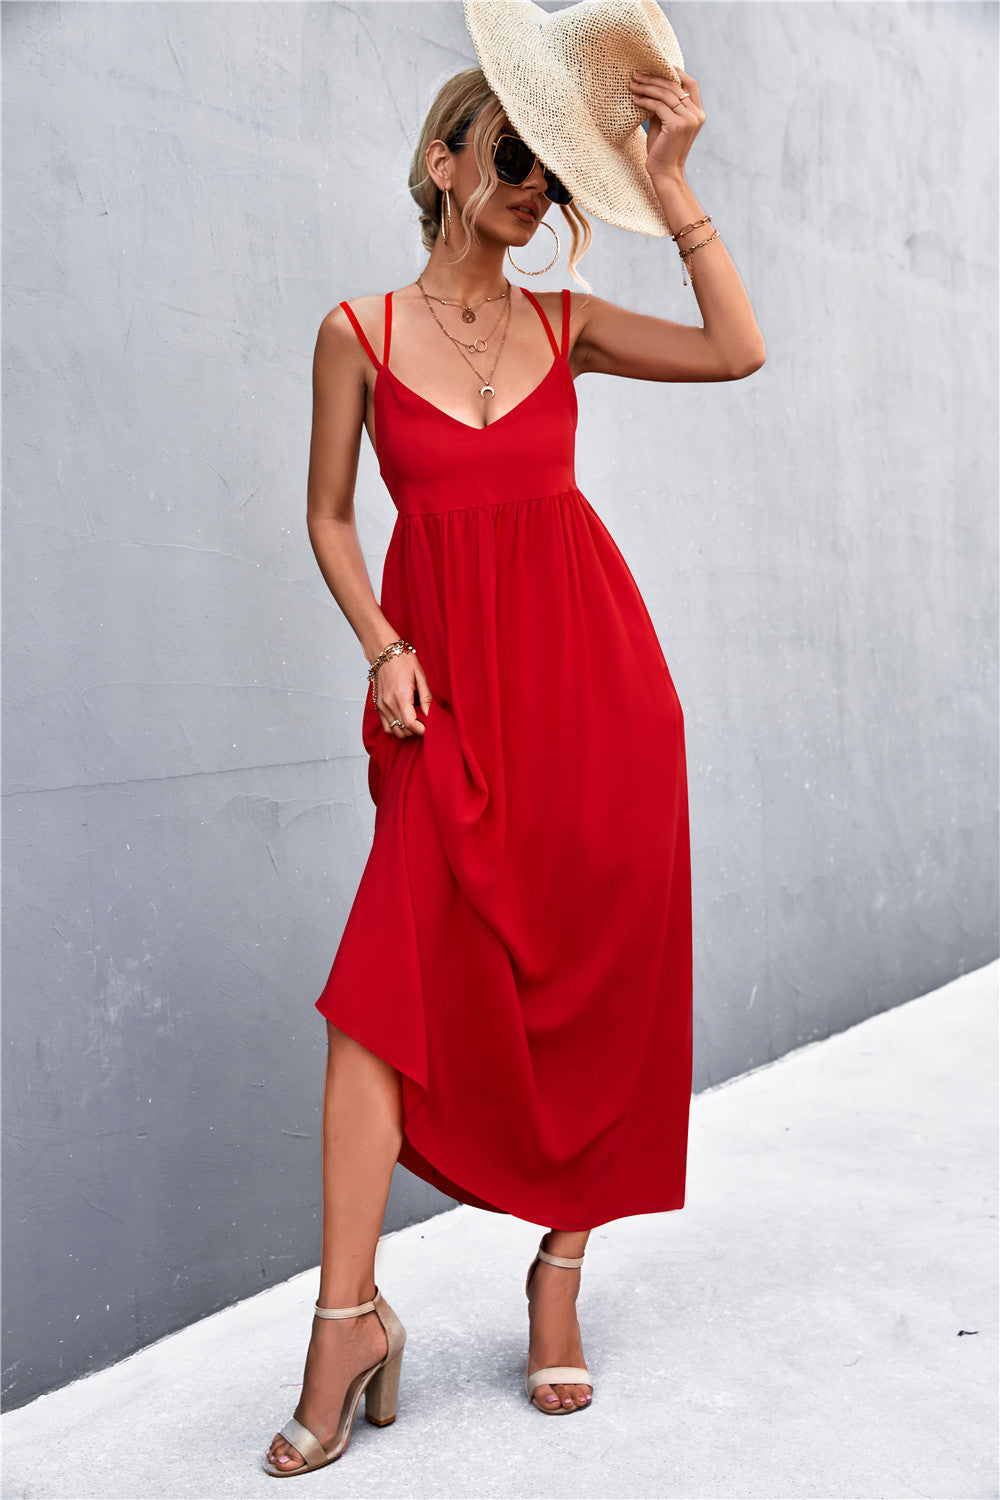 Parisian Chick Double Strap Tie Back Dress Red S Dresses by Vim&Vigor | Vim&Vigor Boutique